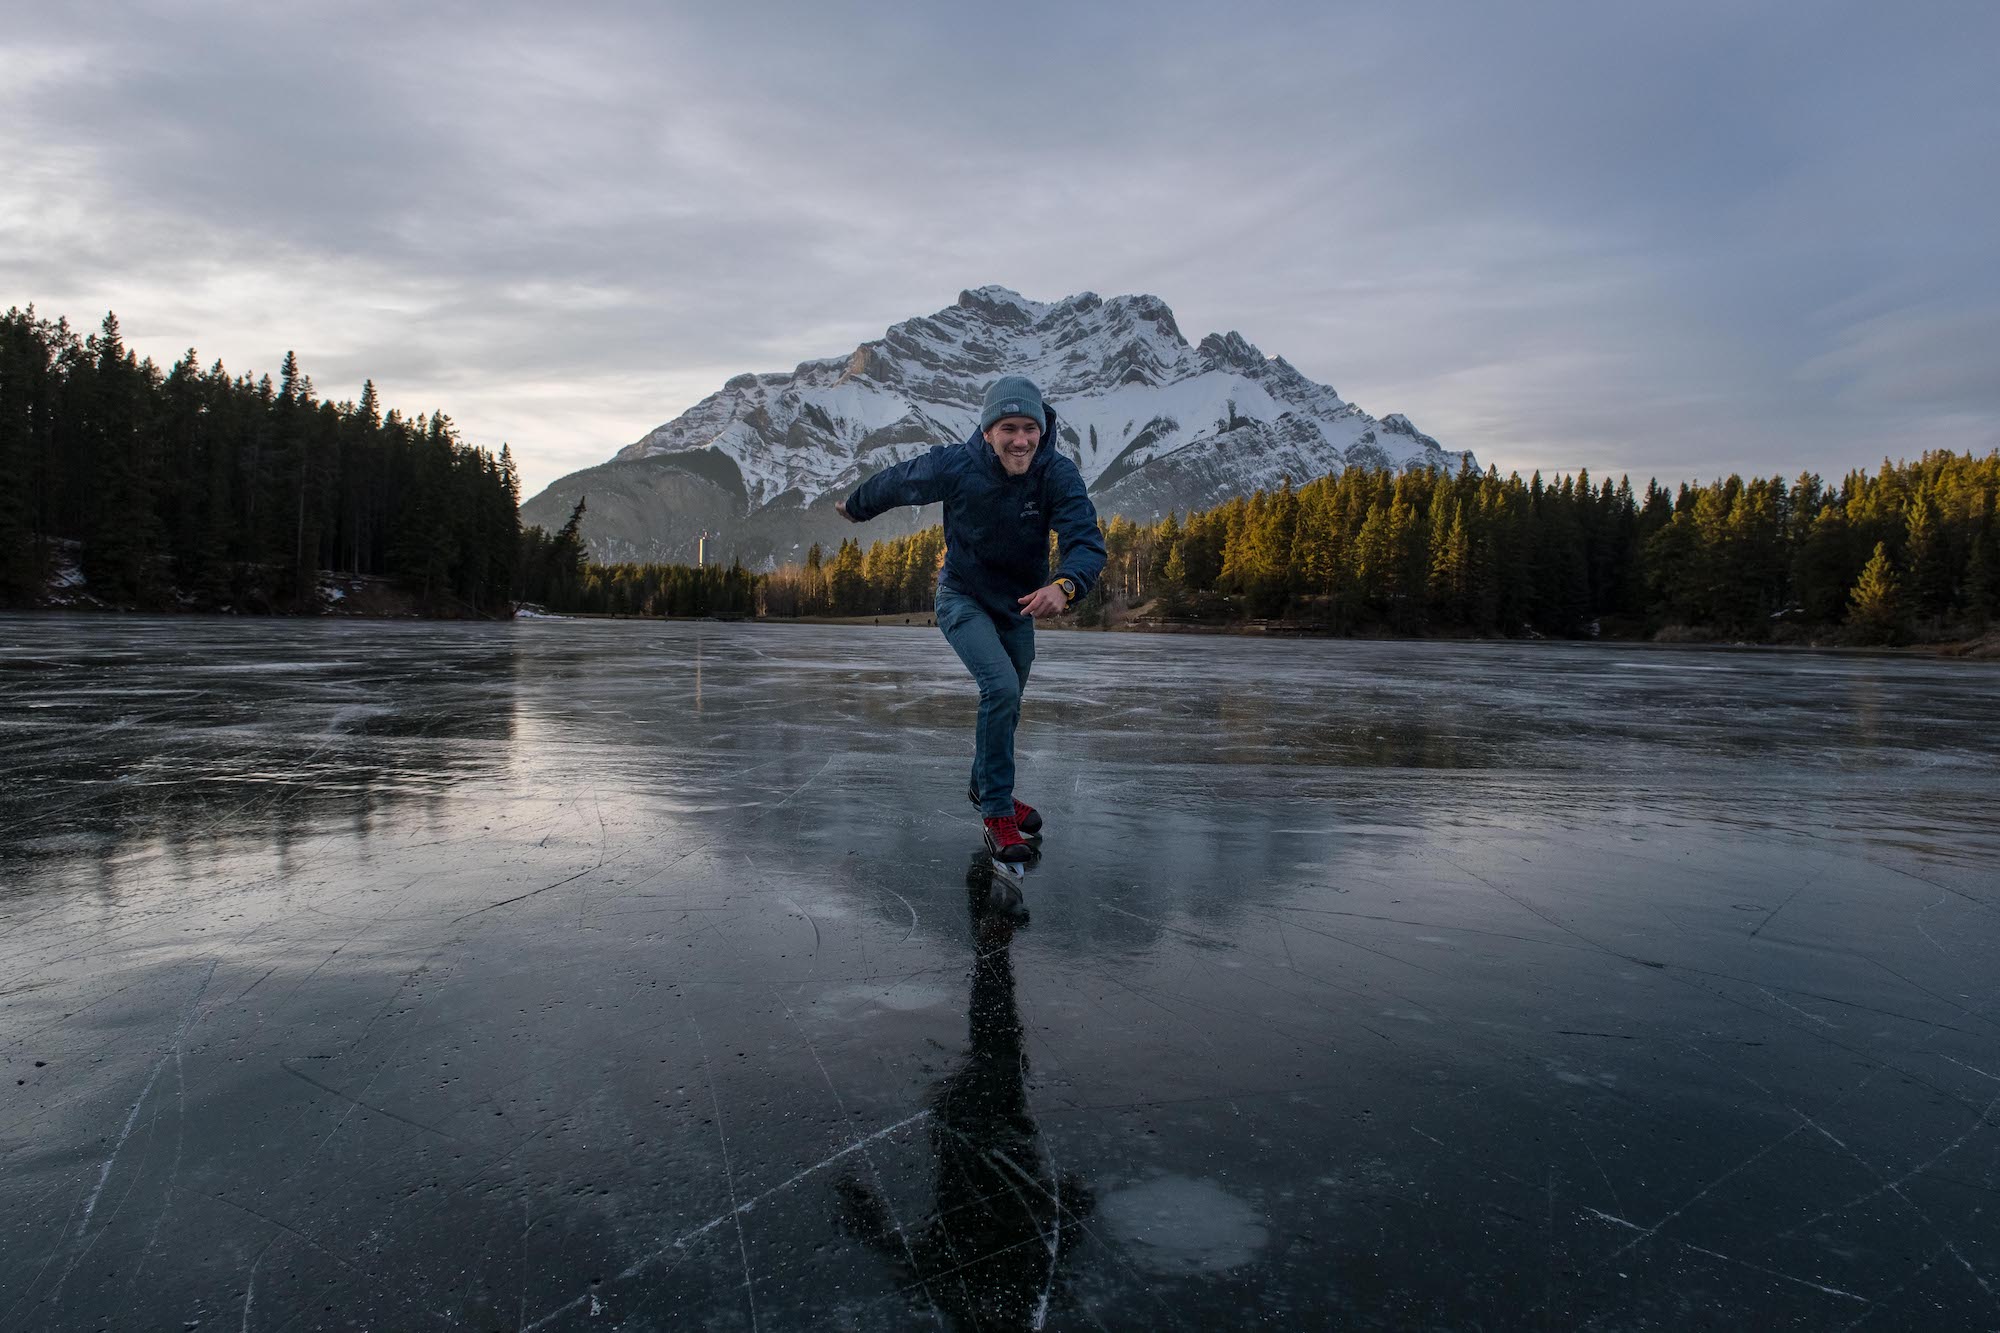 Ice Skating in Banff on Johnson Lake